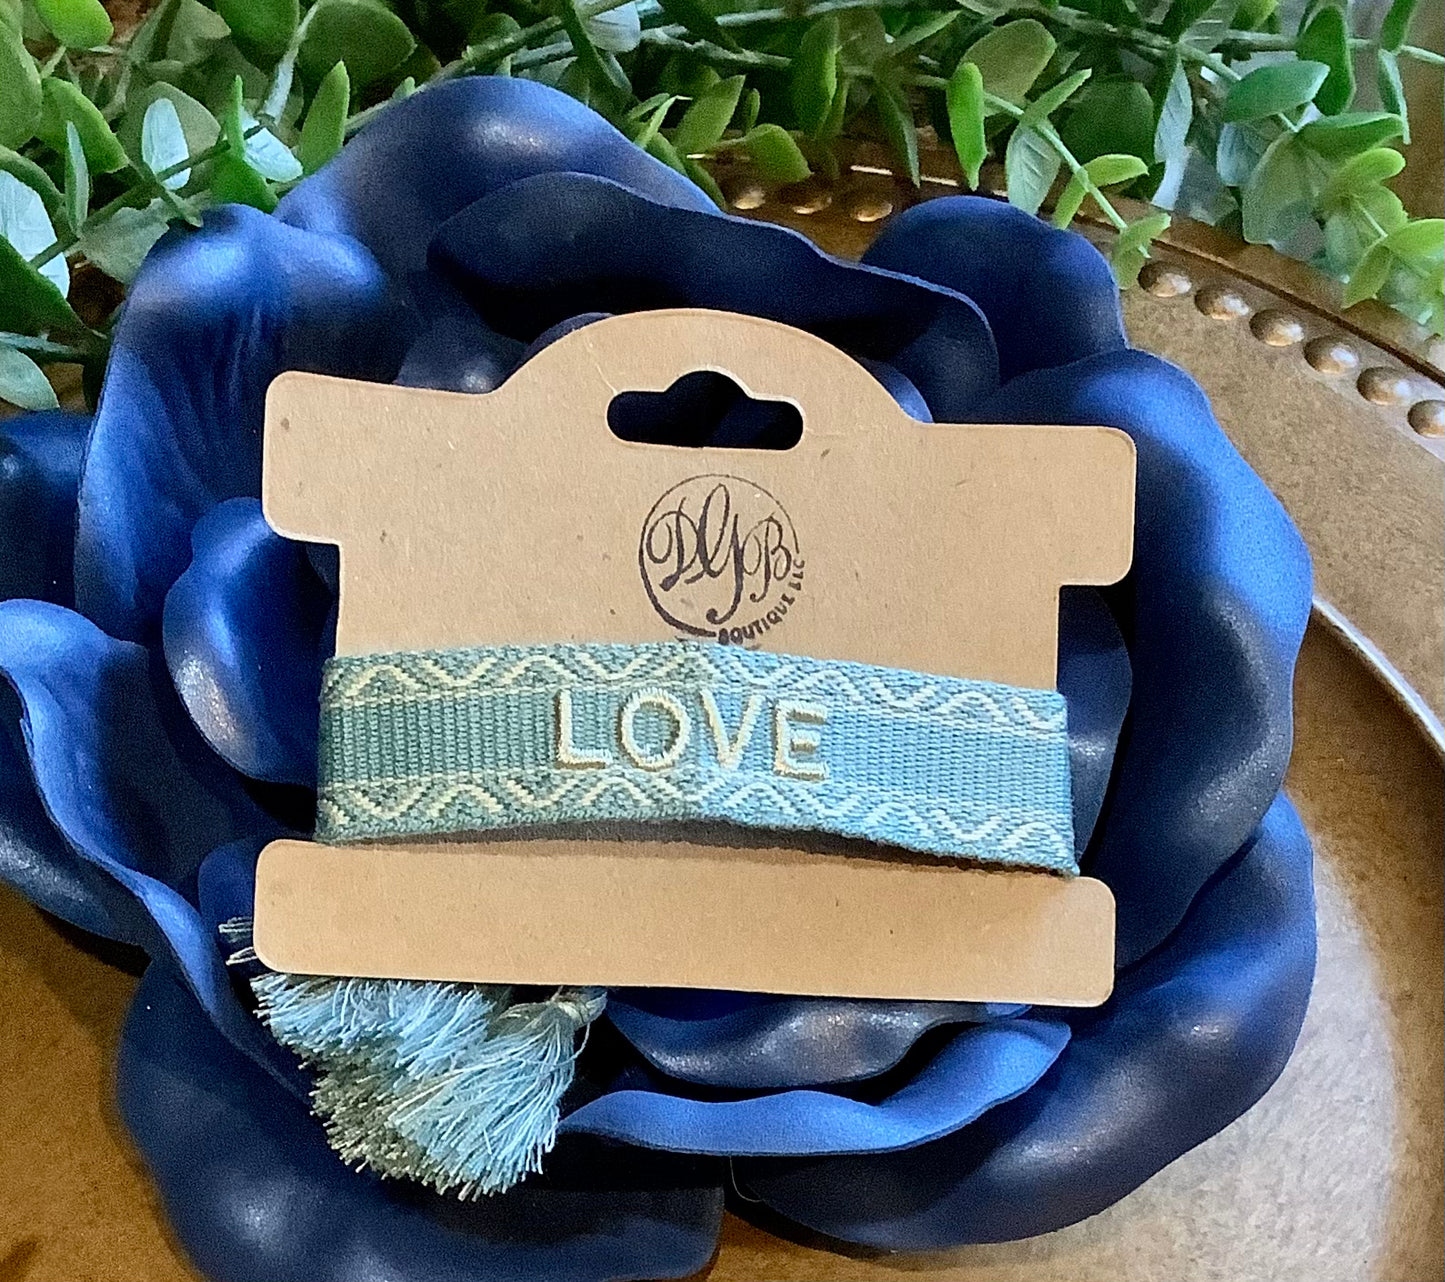 Love-Bohemian Embroidery Handmade Turquoise, Letter Woven Tassel, Adjustable Rope Braided FashionBracelet